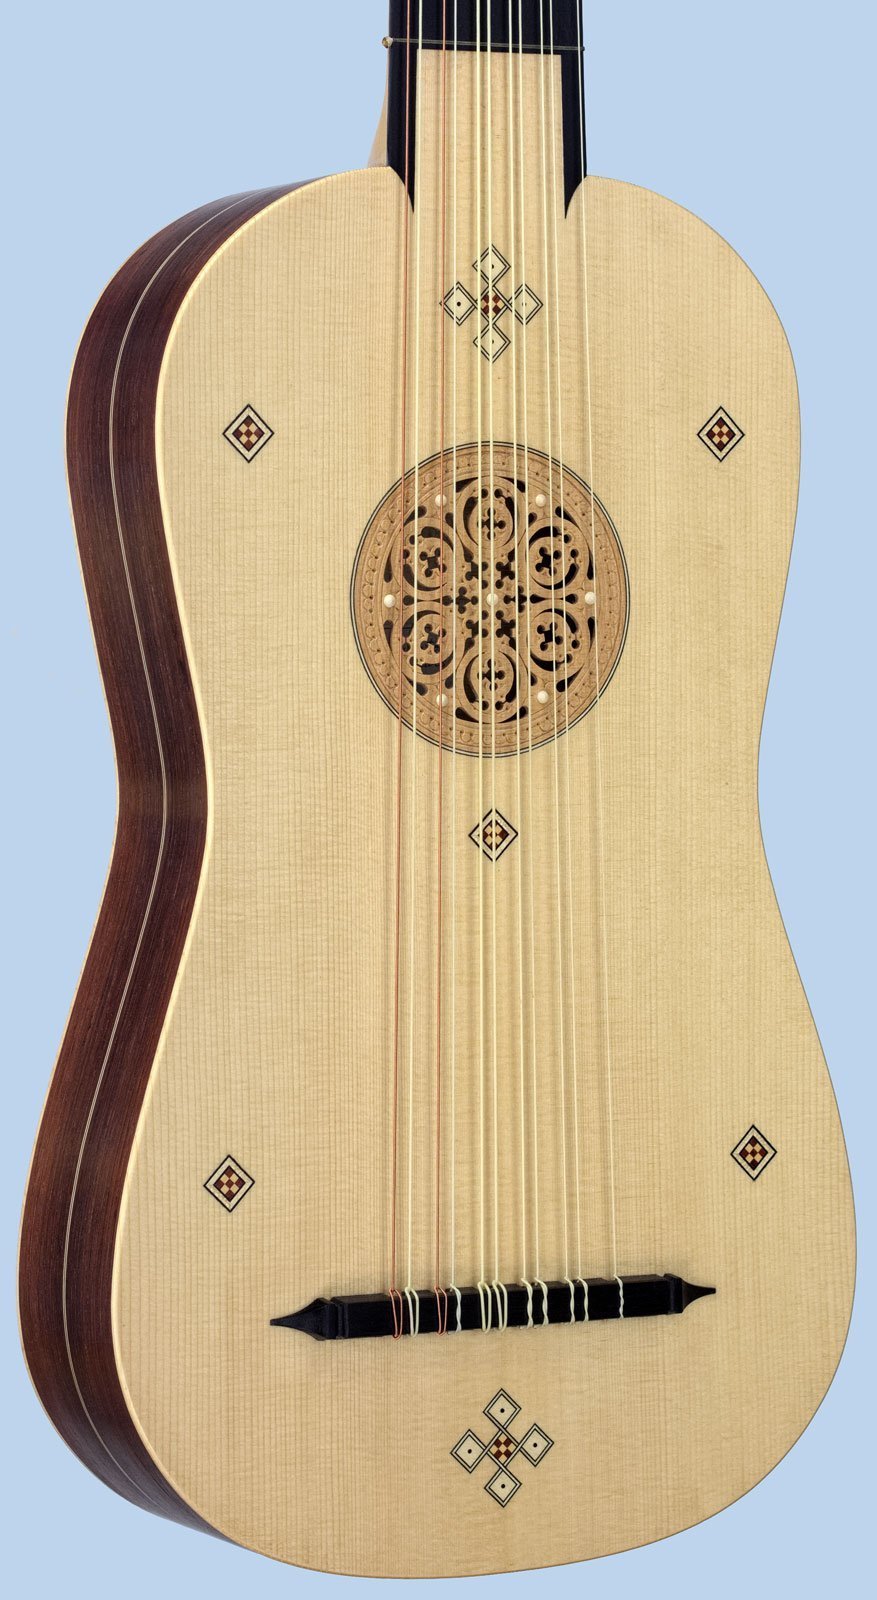 Flat-back vihuela with inlays soundboard